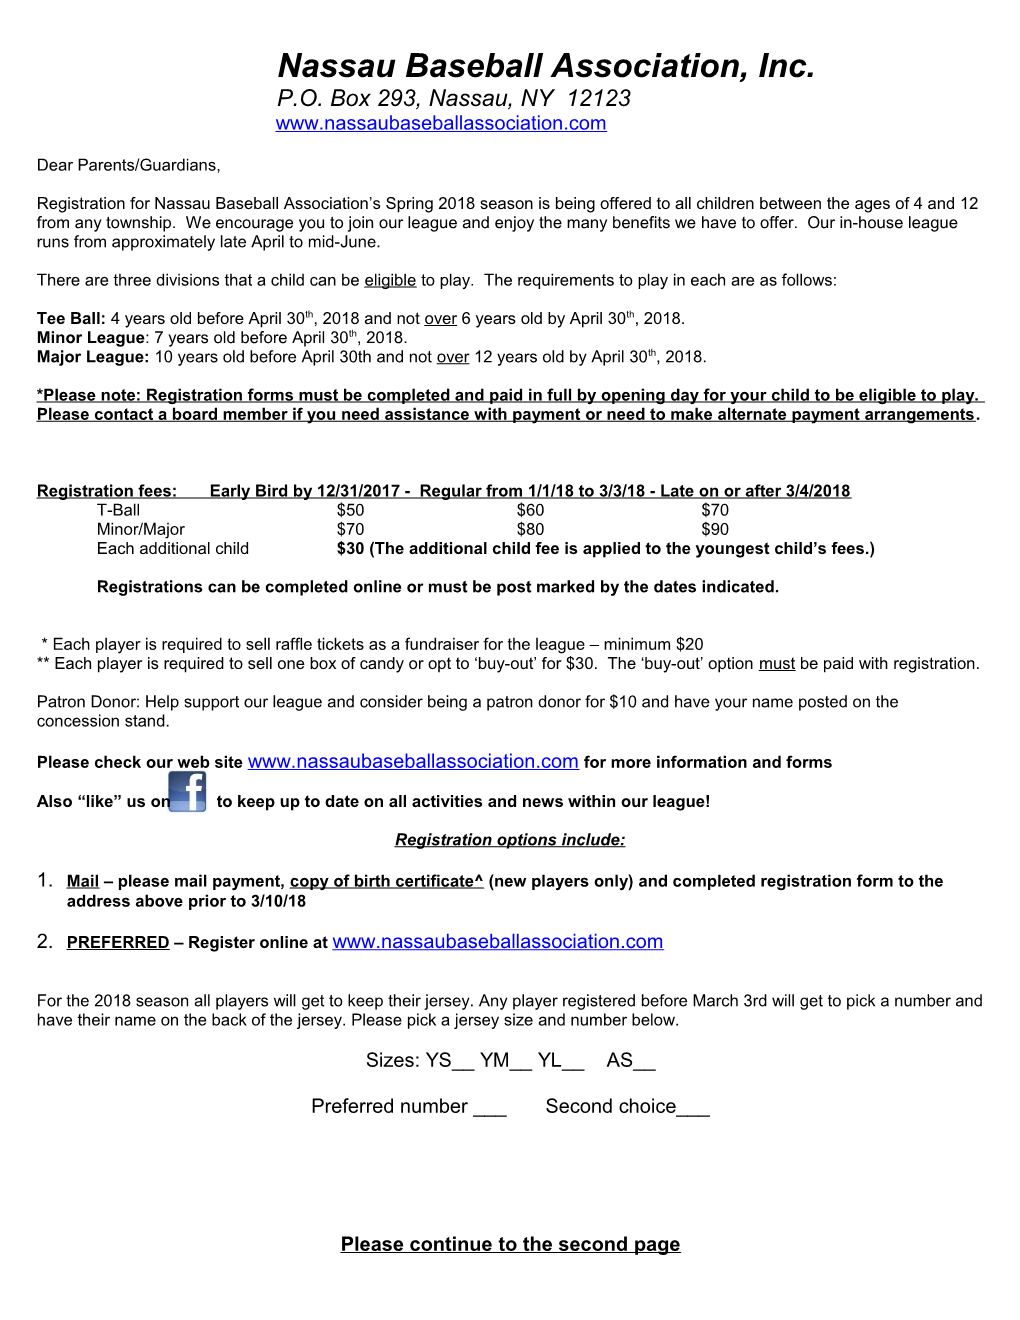 Nassau Baseball Association Registration Form